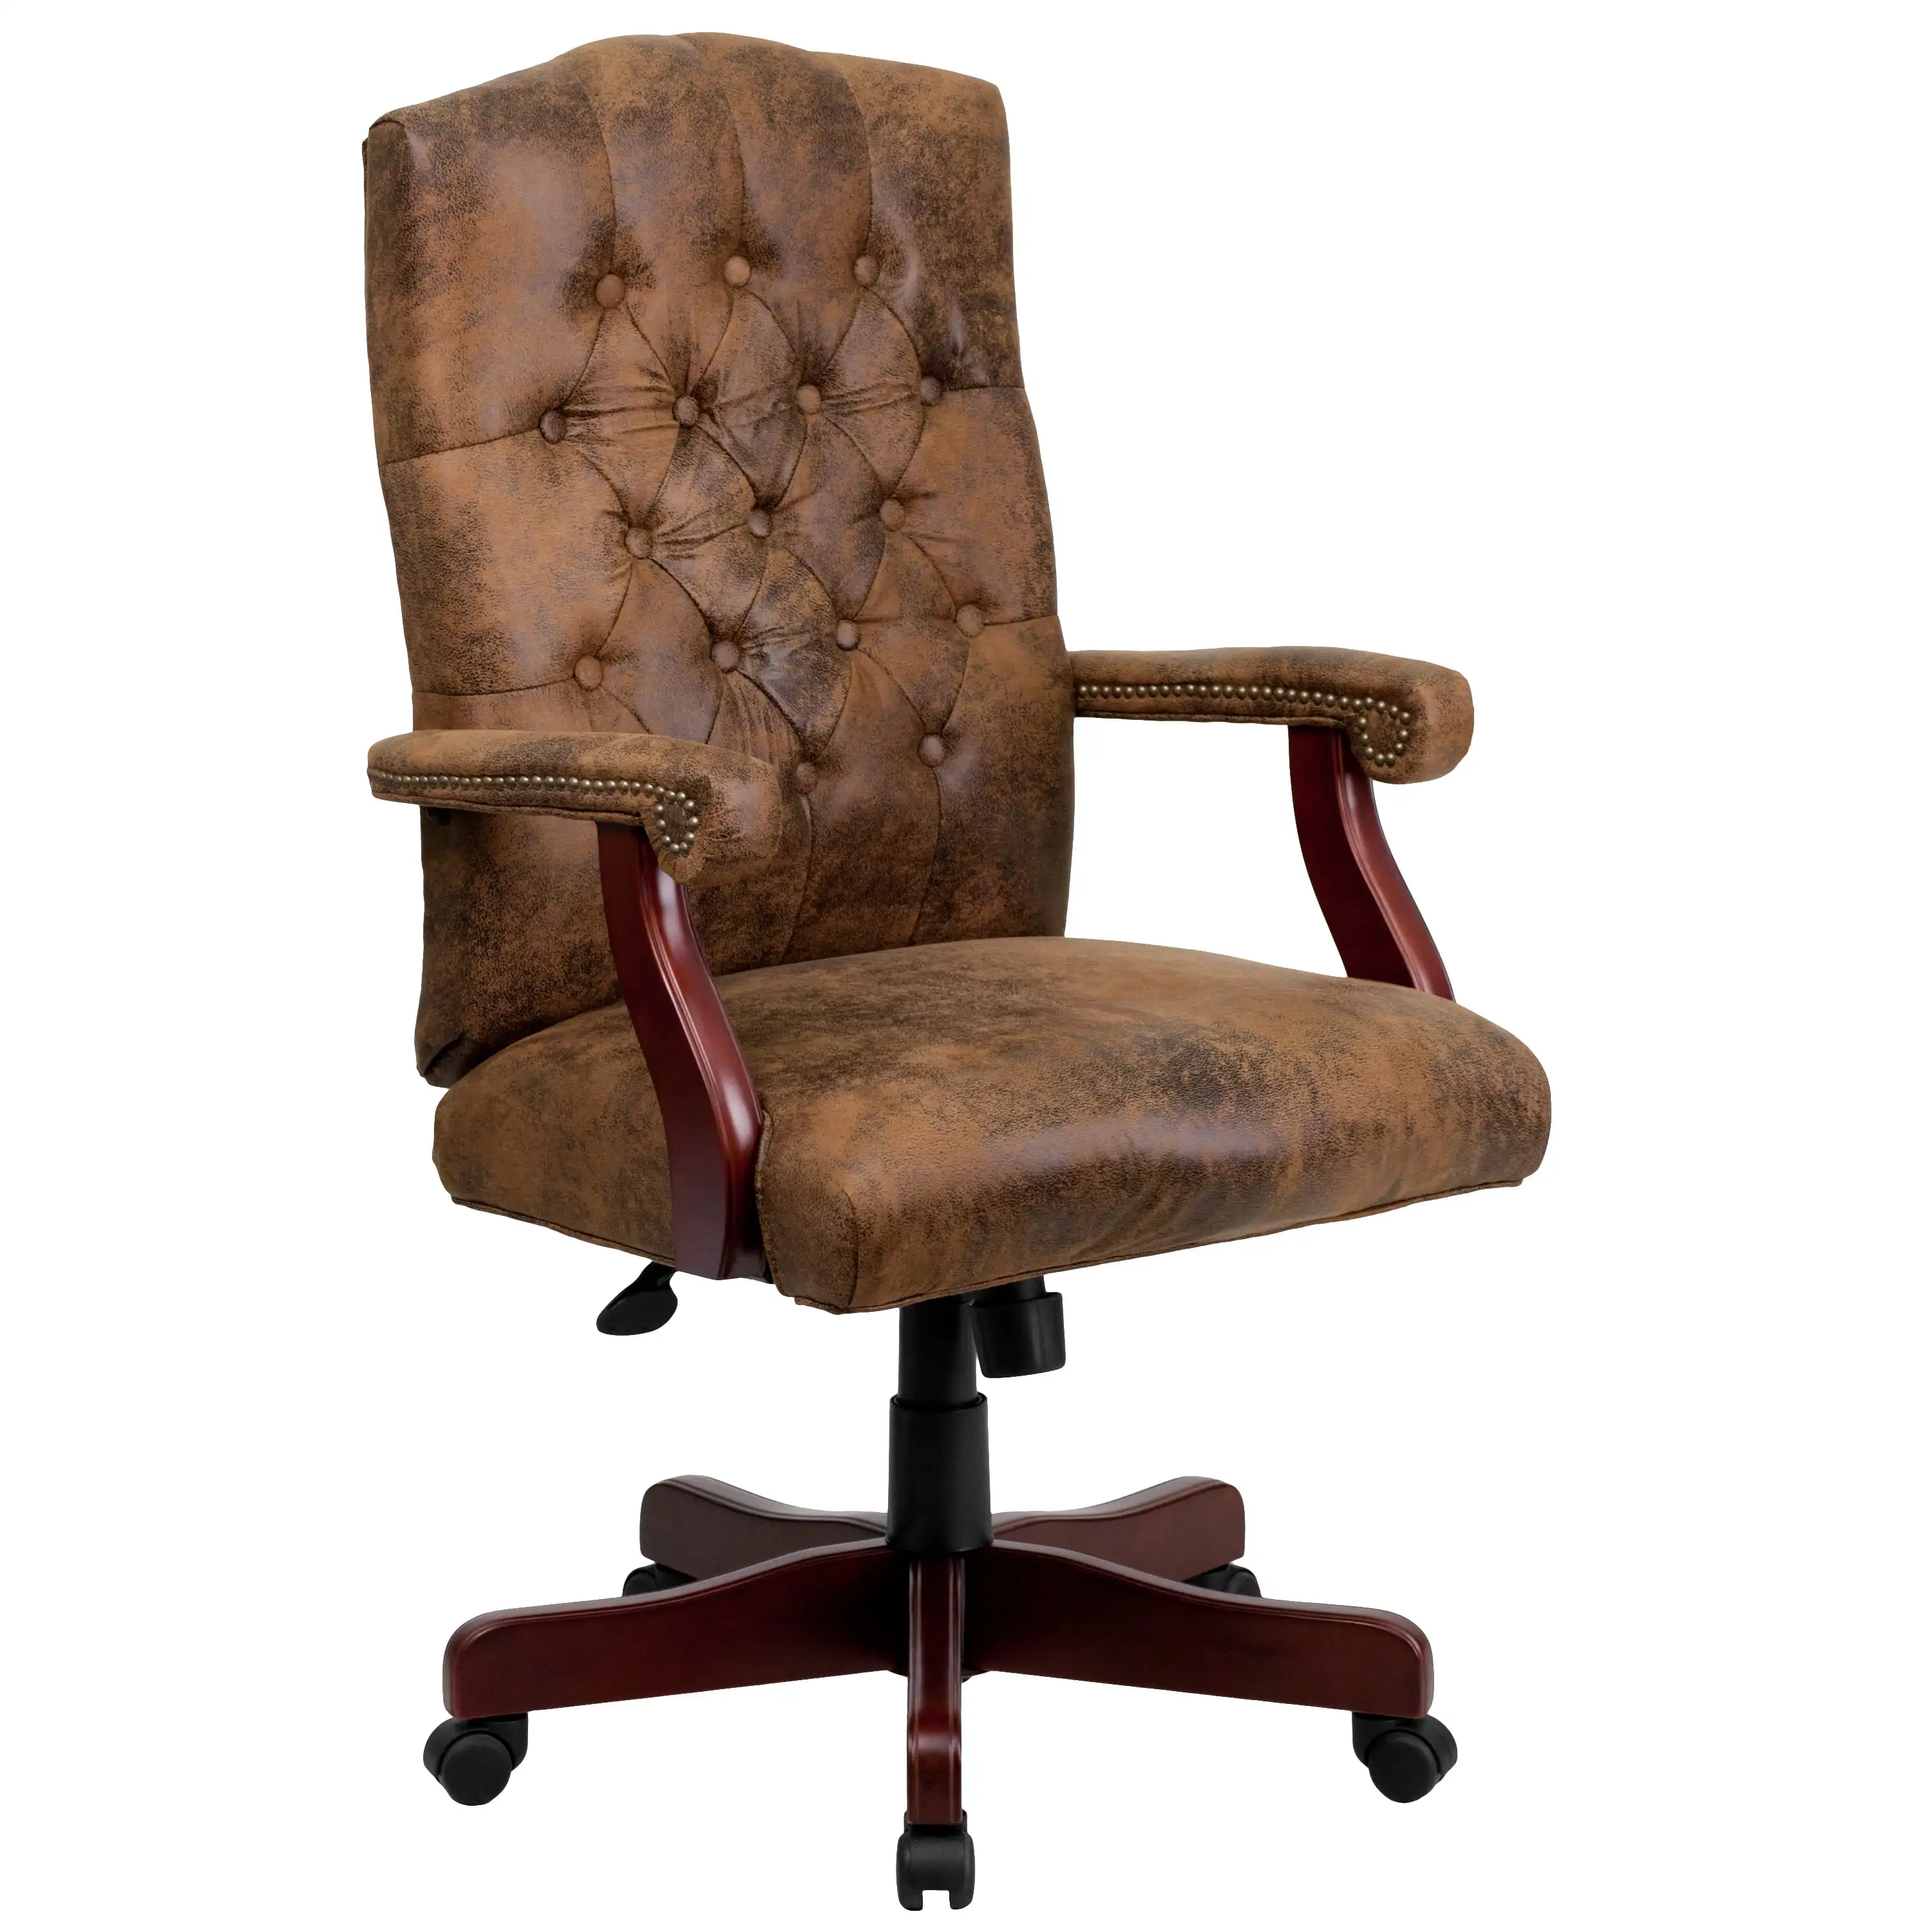 

Flash Furniture Martha Washington Burgundy LeatherSoft Executive Swivel Office Chair with Arms